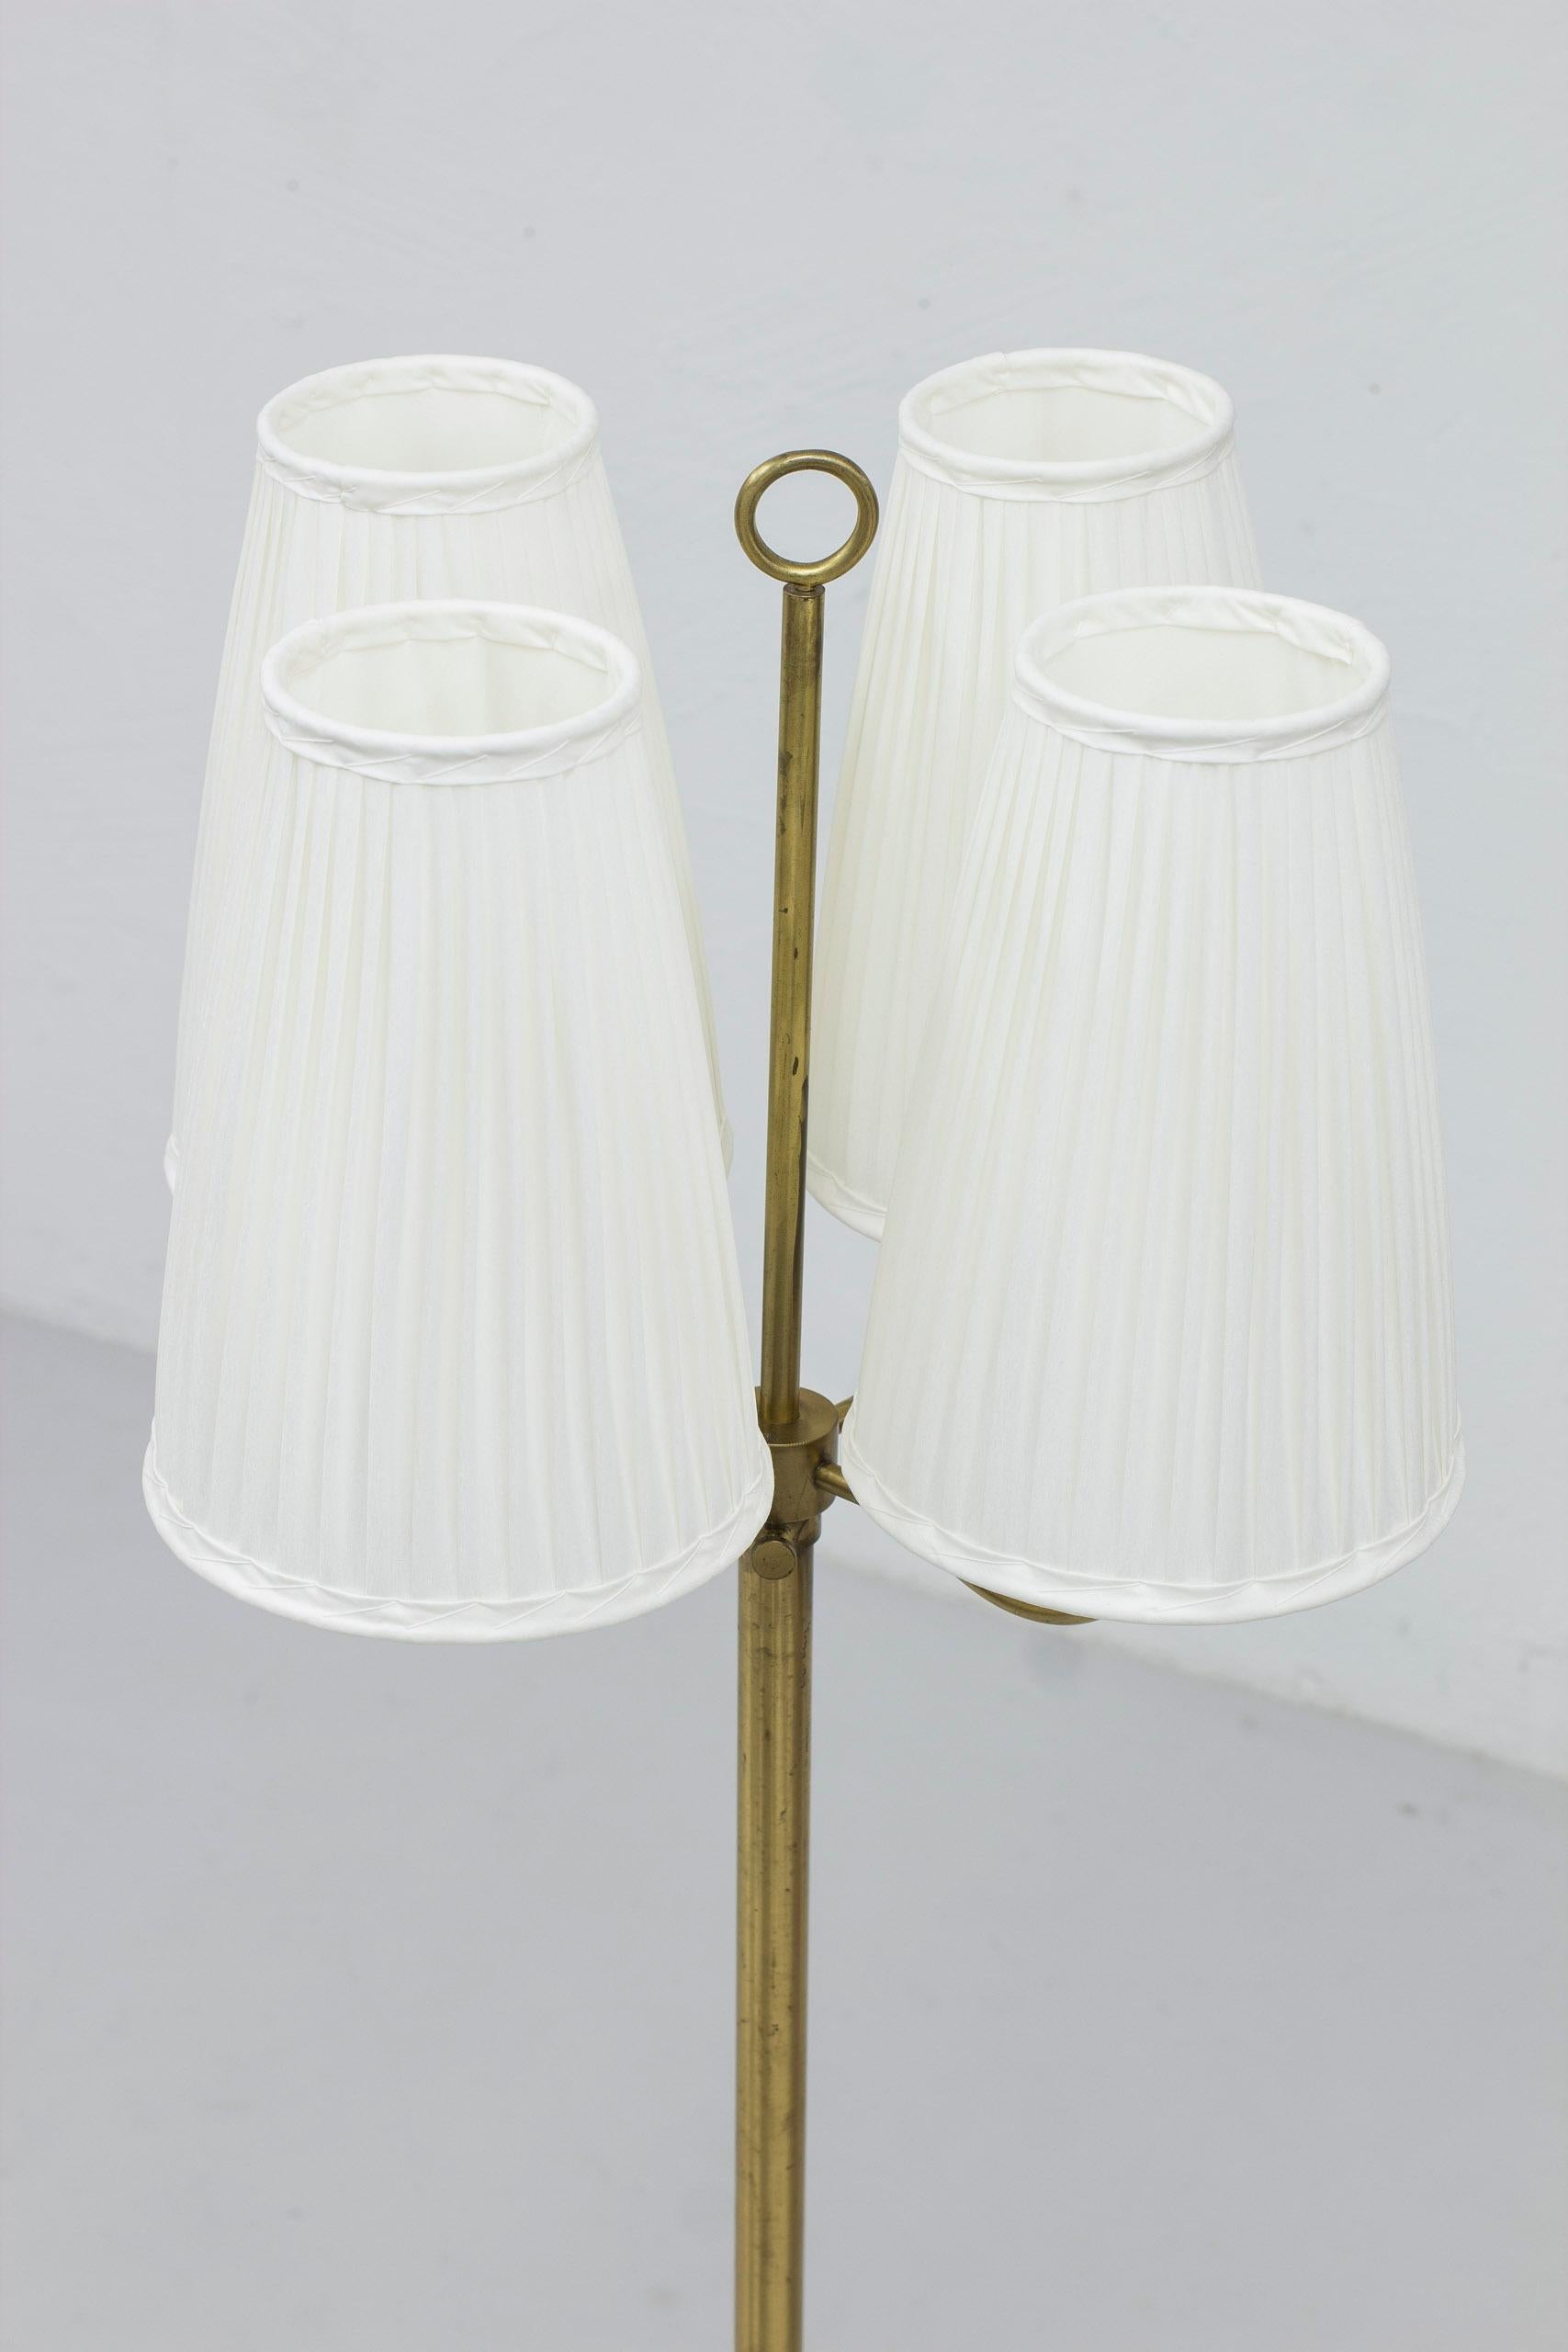 Swedish Modern floor lamp in brass in the manner of Josef Frank, Sweden, 1940s For Sale 6